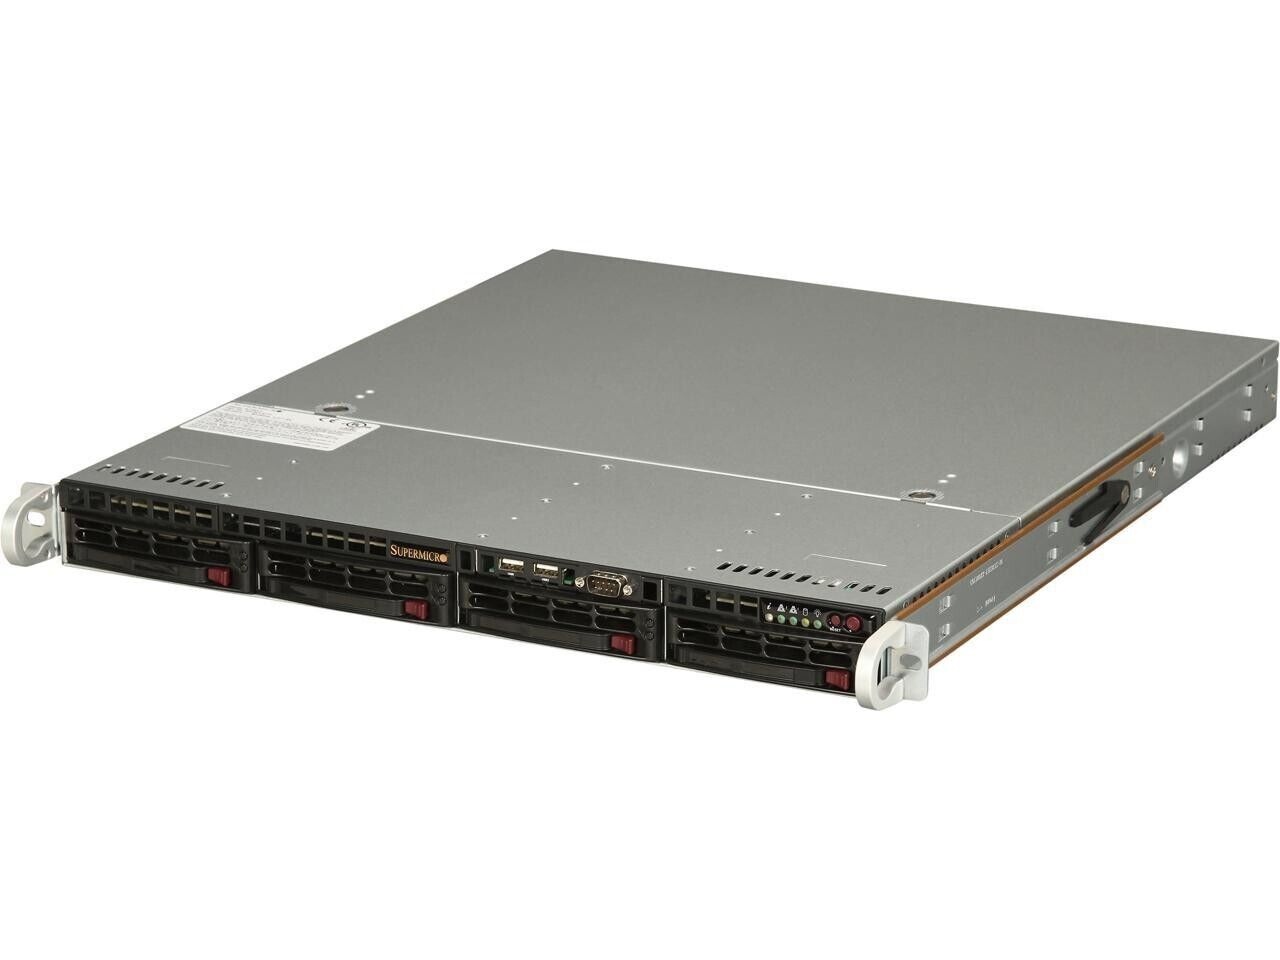 Supermicro SYS-5018D-MTF 1U Short-Depth Barebones Server, NEW, IN STOCK 5 Yr Wty